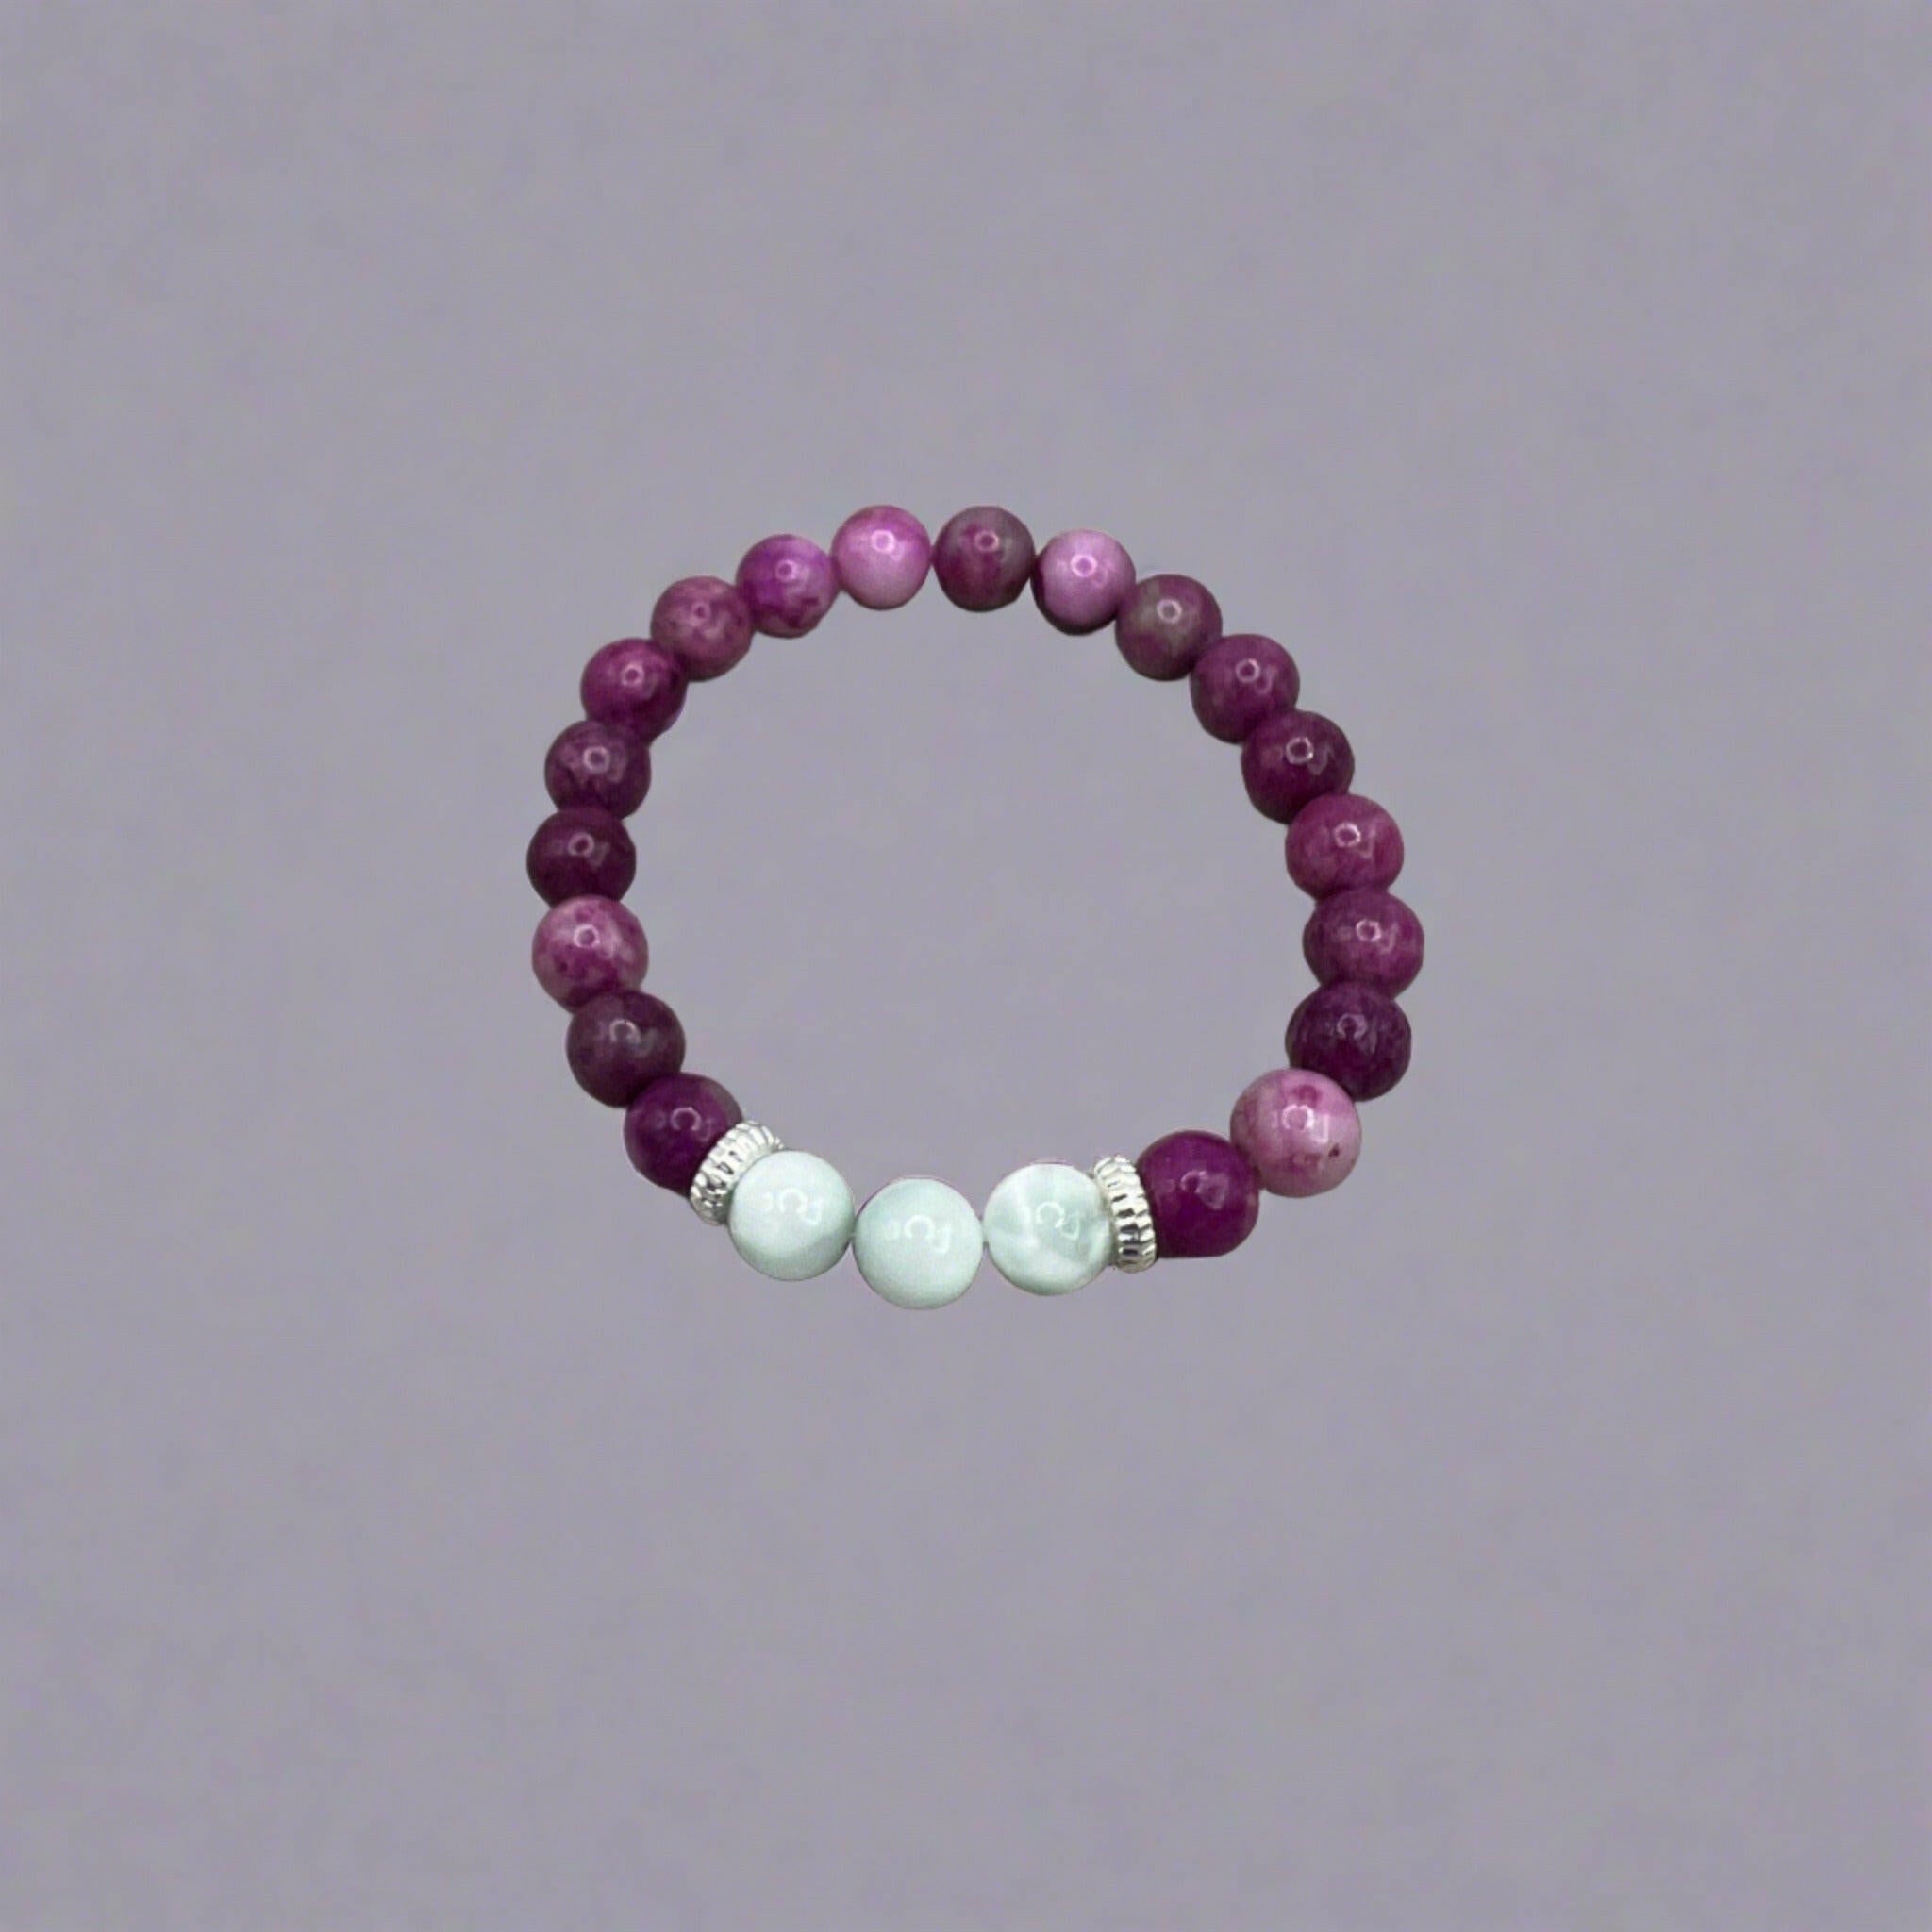 Bec Sue Jewelry Shop chakra bracelet 6.5 / purple / sugilite and angelite 8mm Elegant Sugilite and Angelite Bracelet, Sugilite Bracelet Tags 602